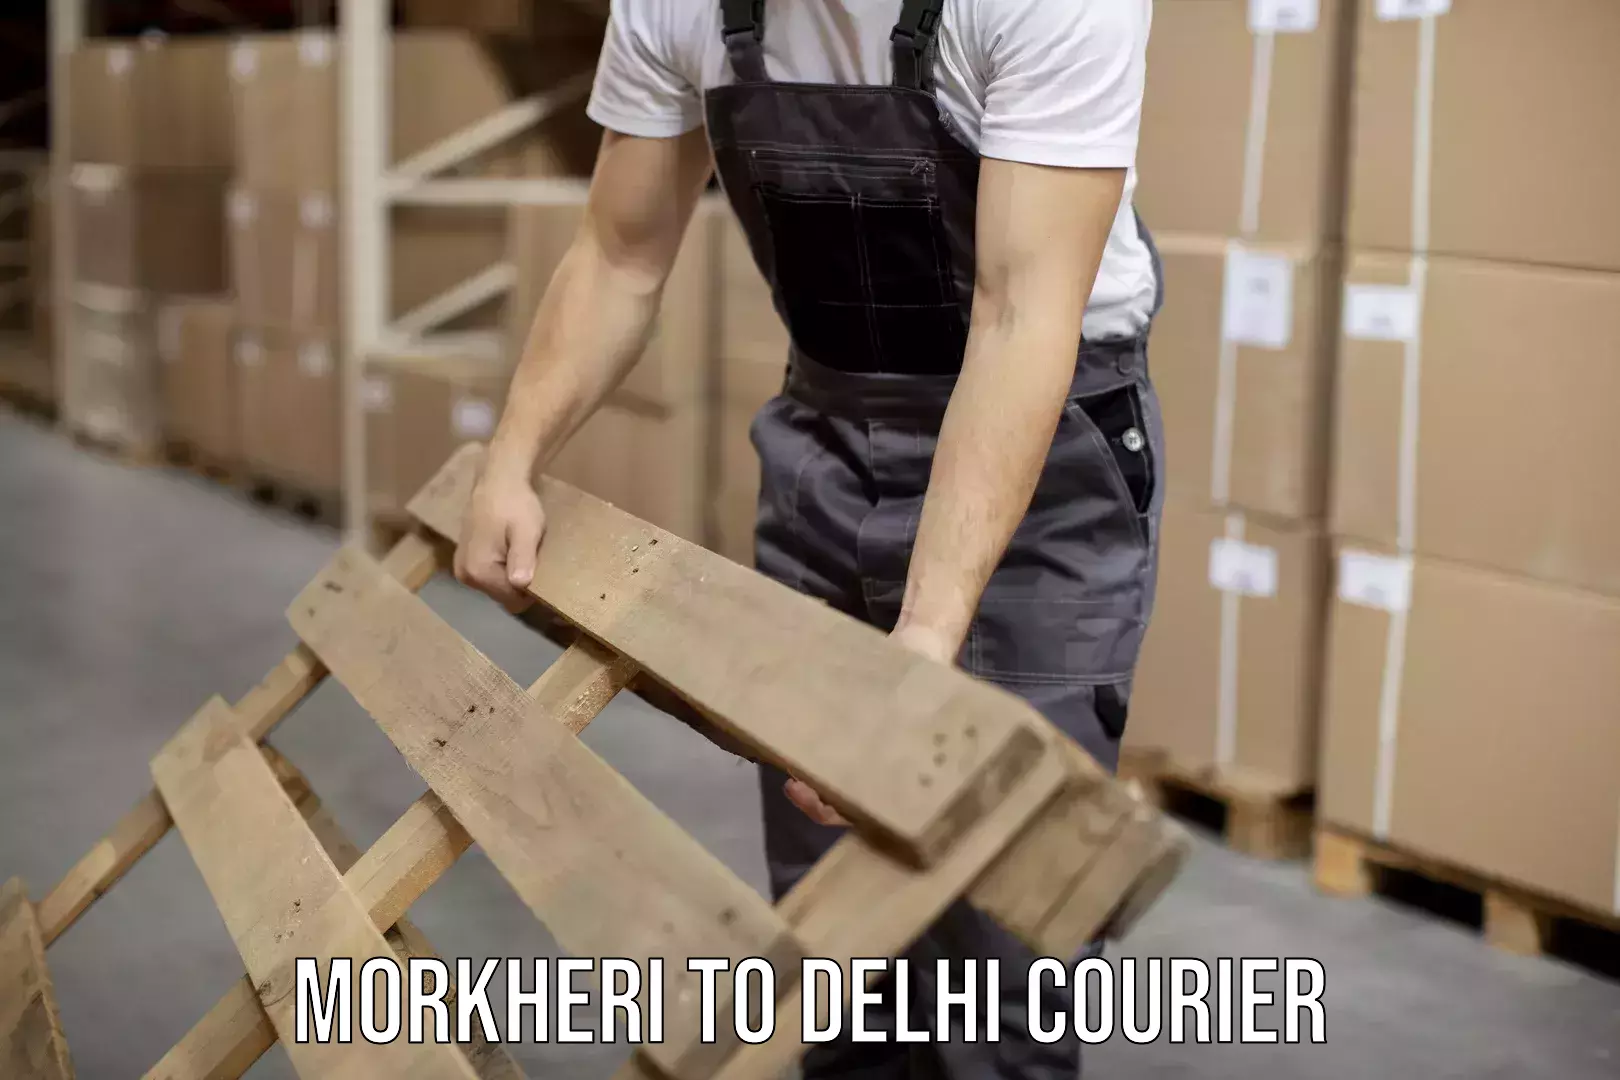 Courier service booking Morkheri to Ramesh Nagar